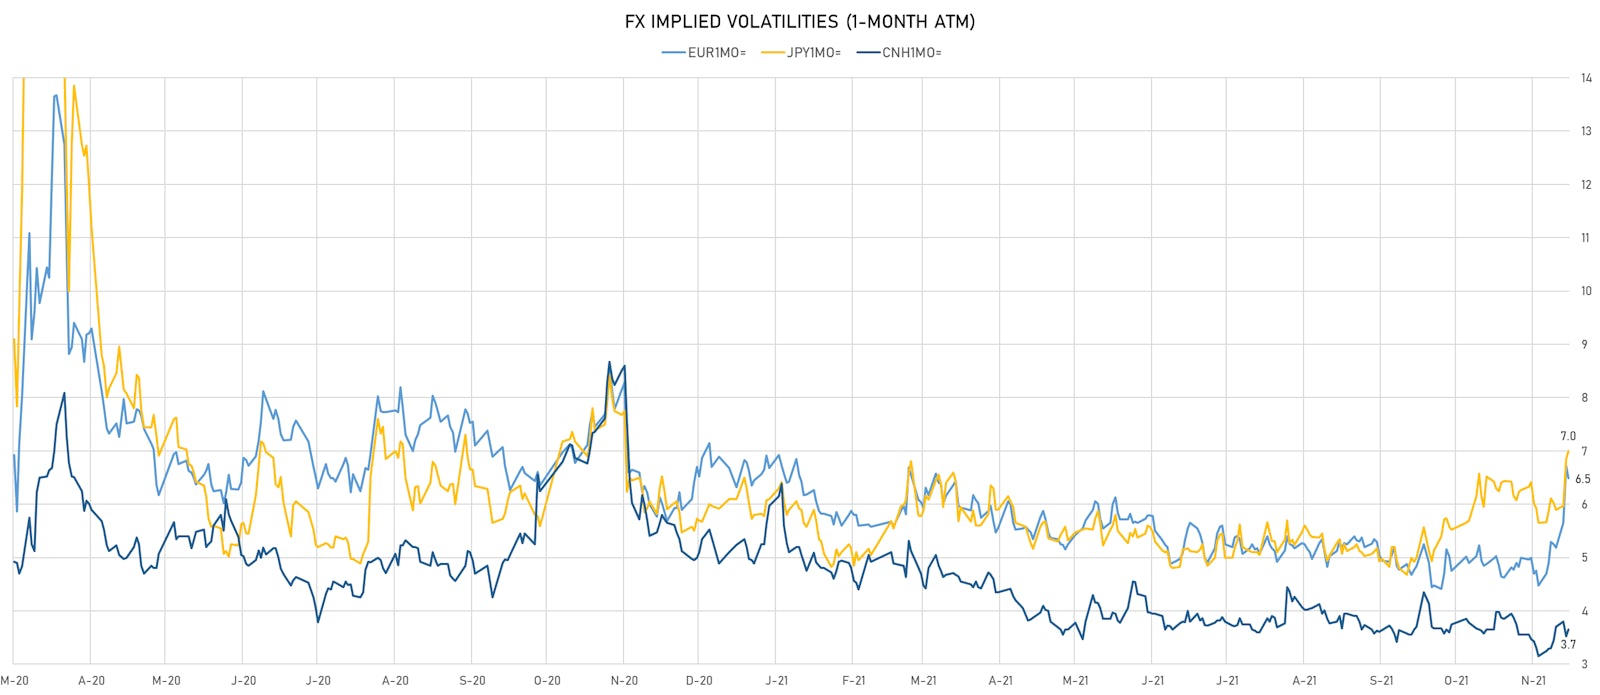 EUR, JPY, CNH 1-Month ATM Implied Volatilities | Sources: ϕpost, Refinitiv data